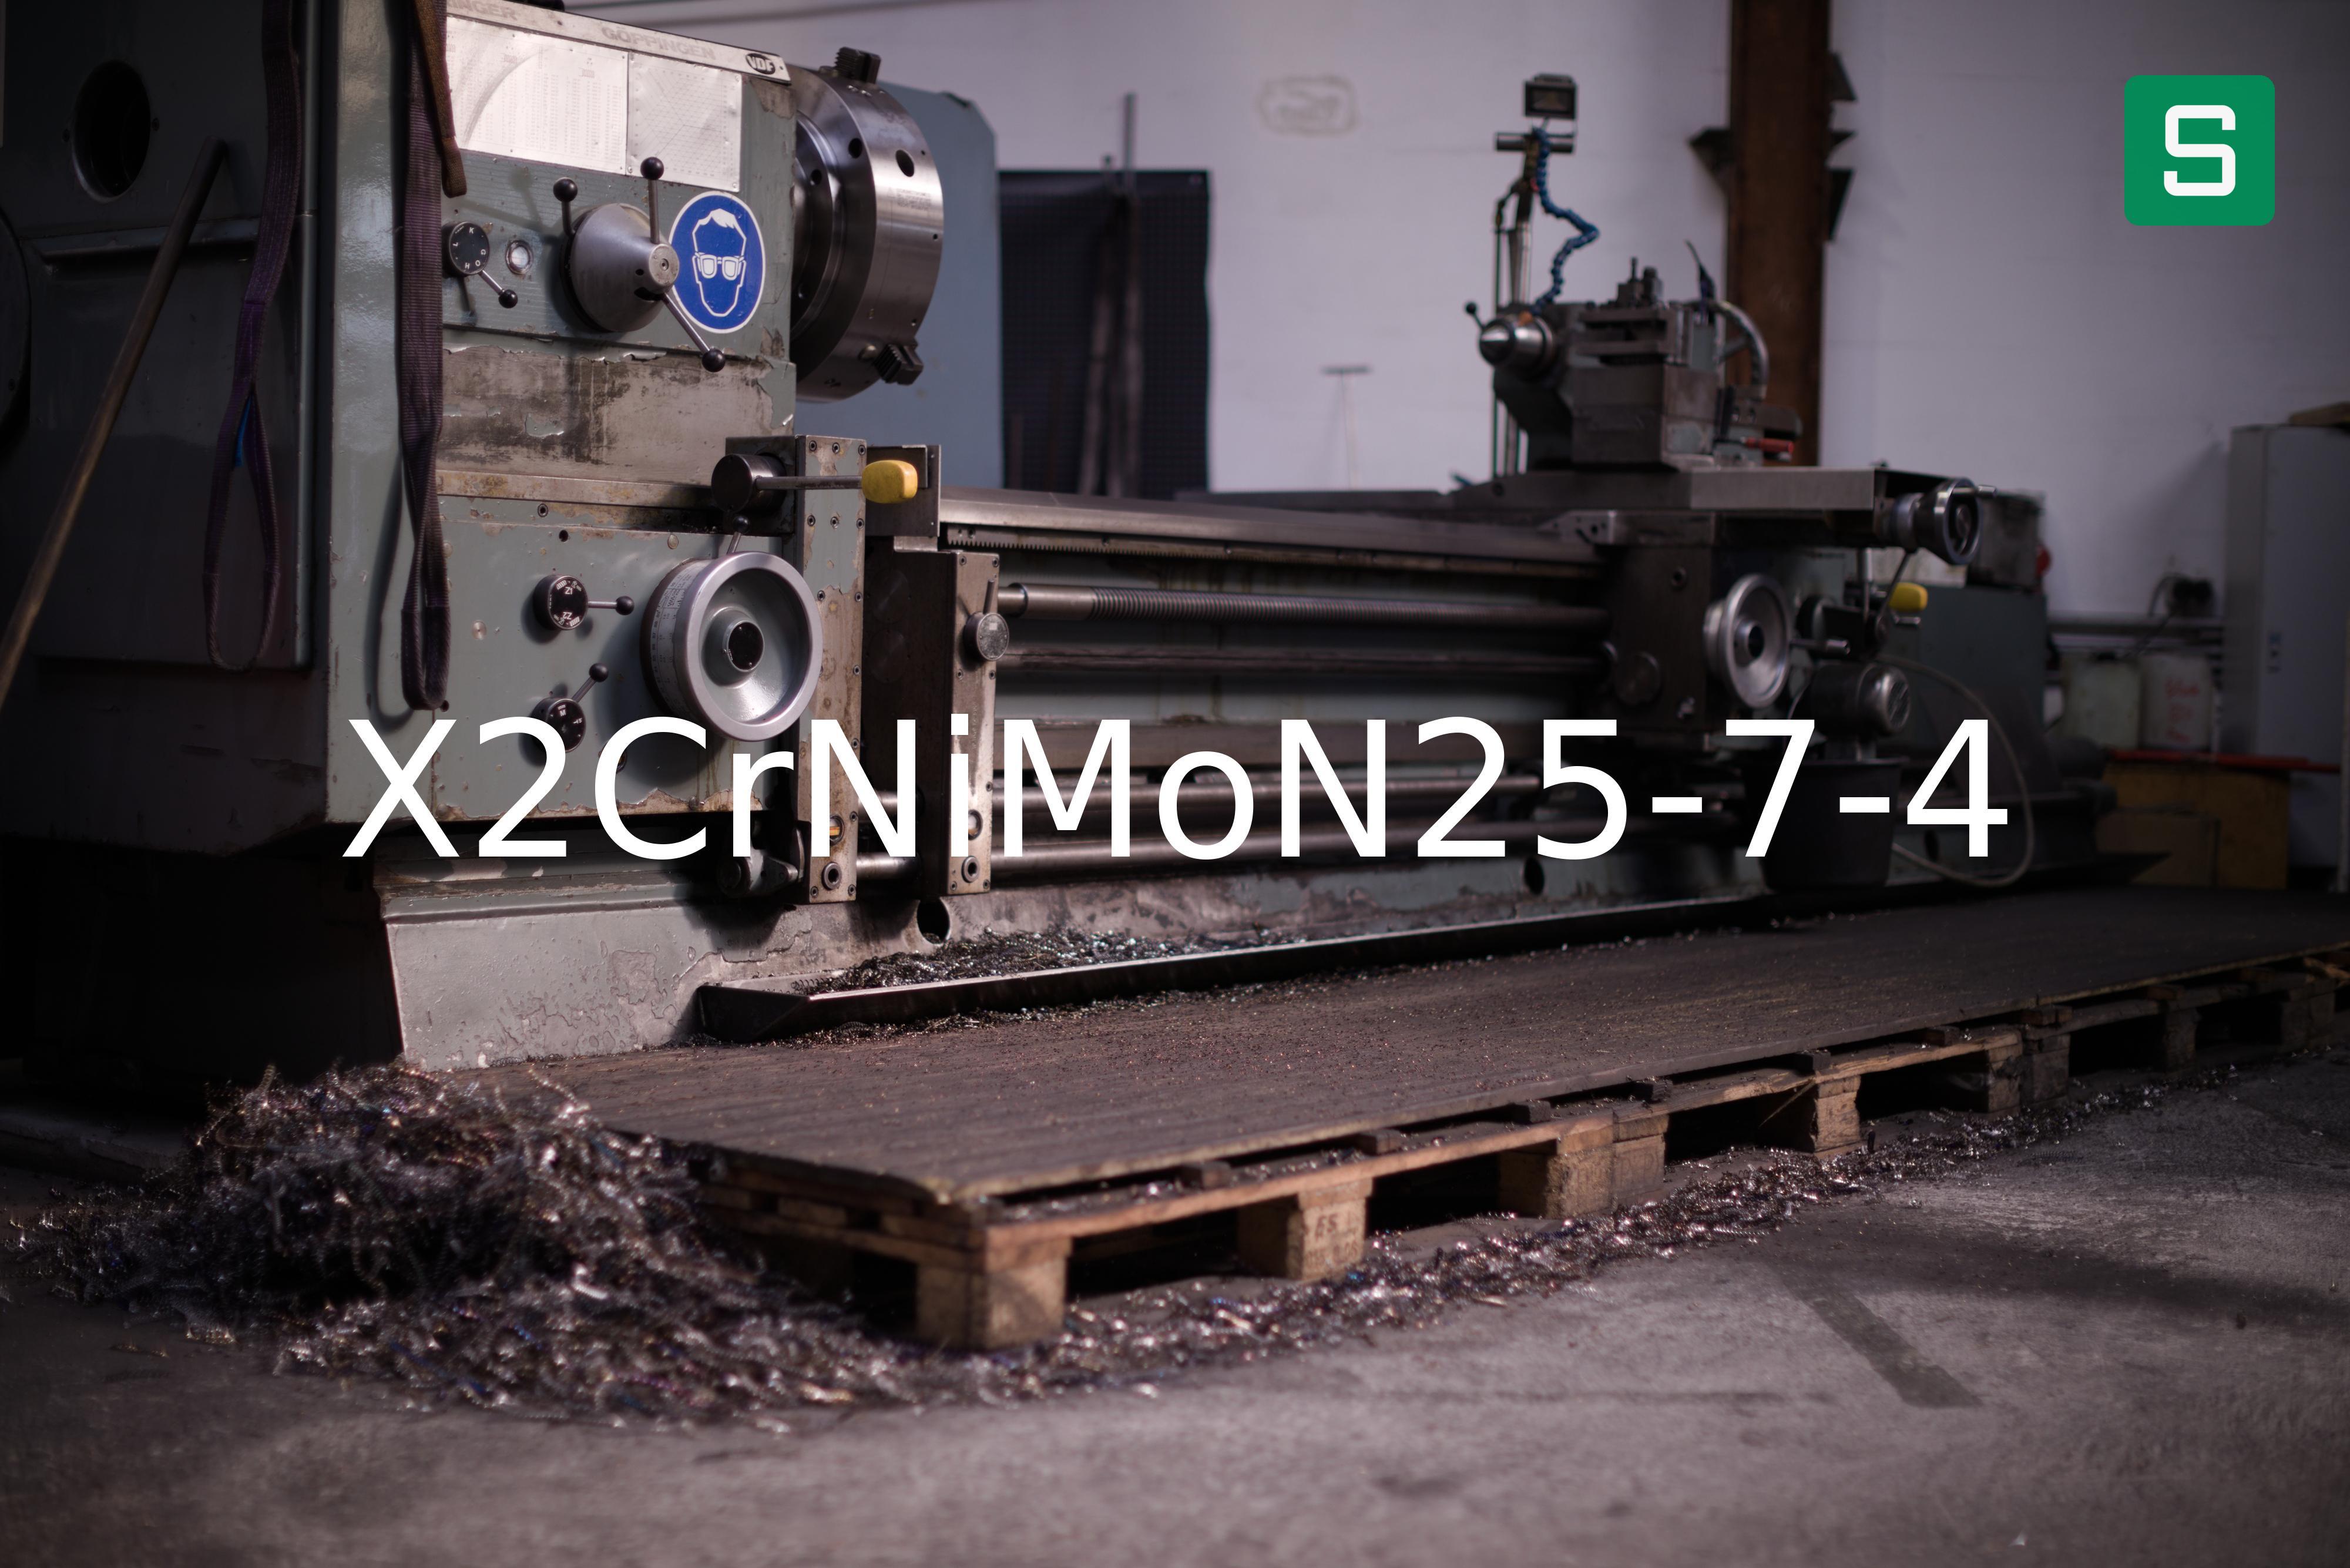 Steel Material: X2CrNiMoN25-7-4